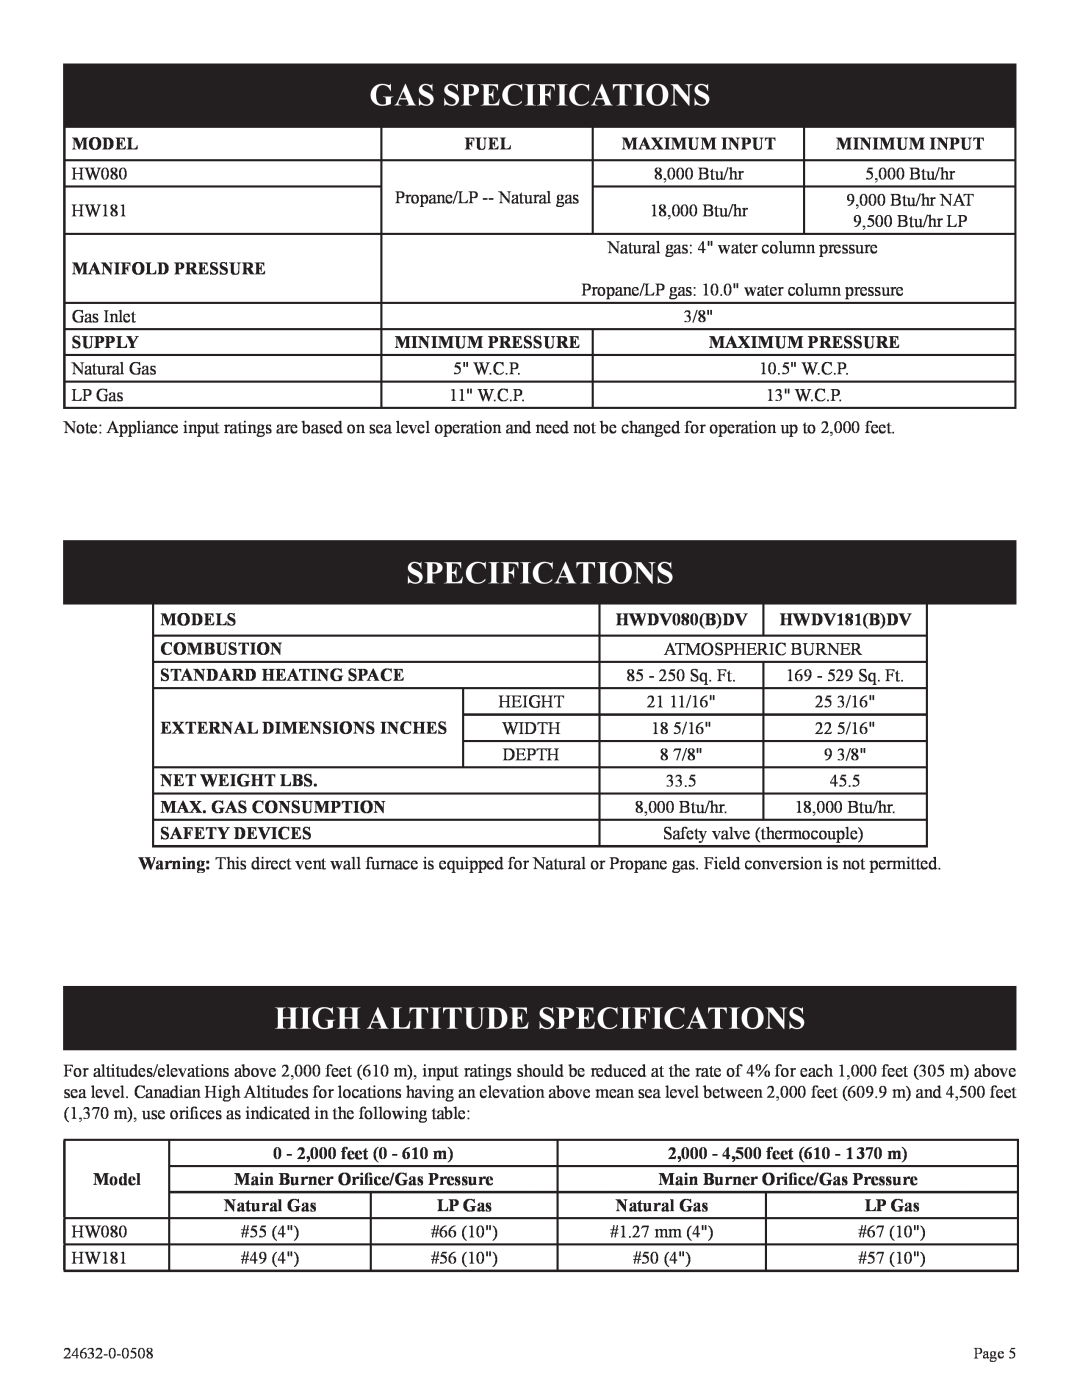 Epson P)-1 Gas Specifications, High Altitude Specifications, Model, Fuel, Maximum Input, Minimum Input, Manifold Pressure 